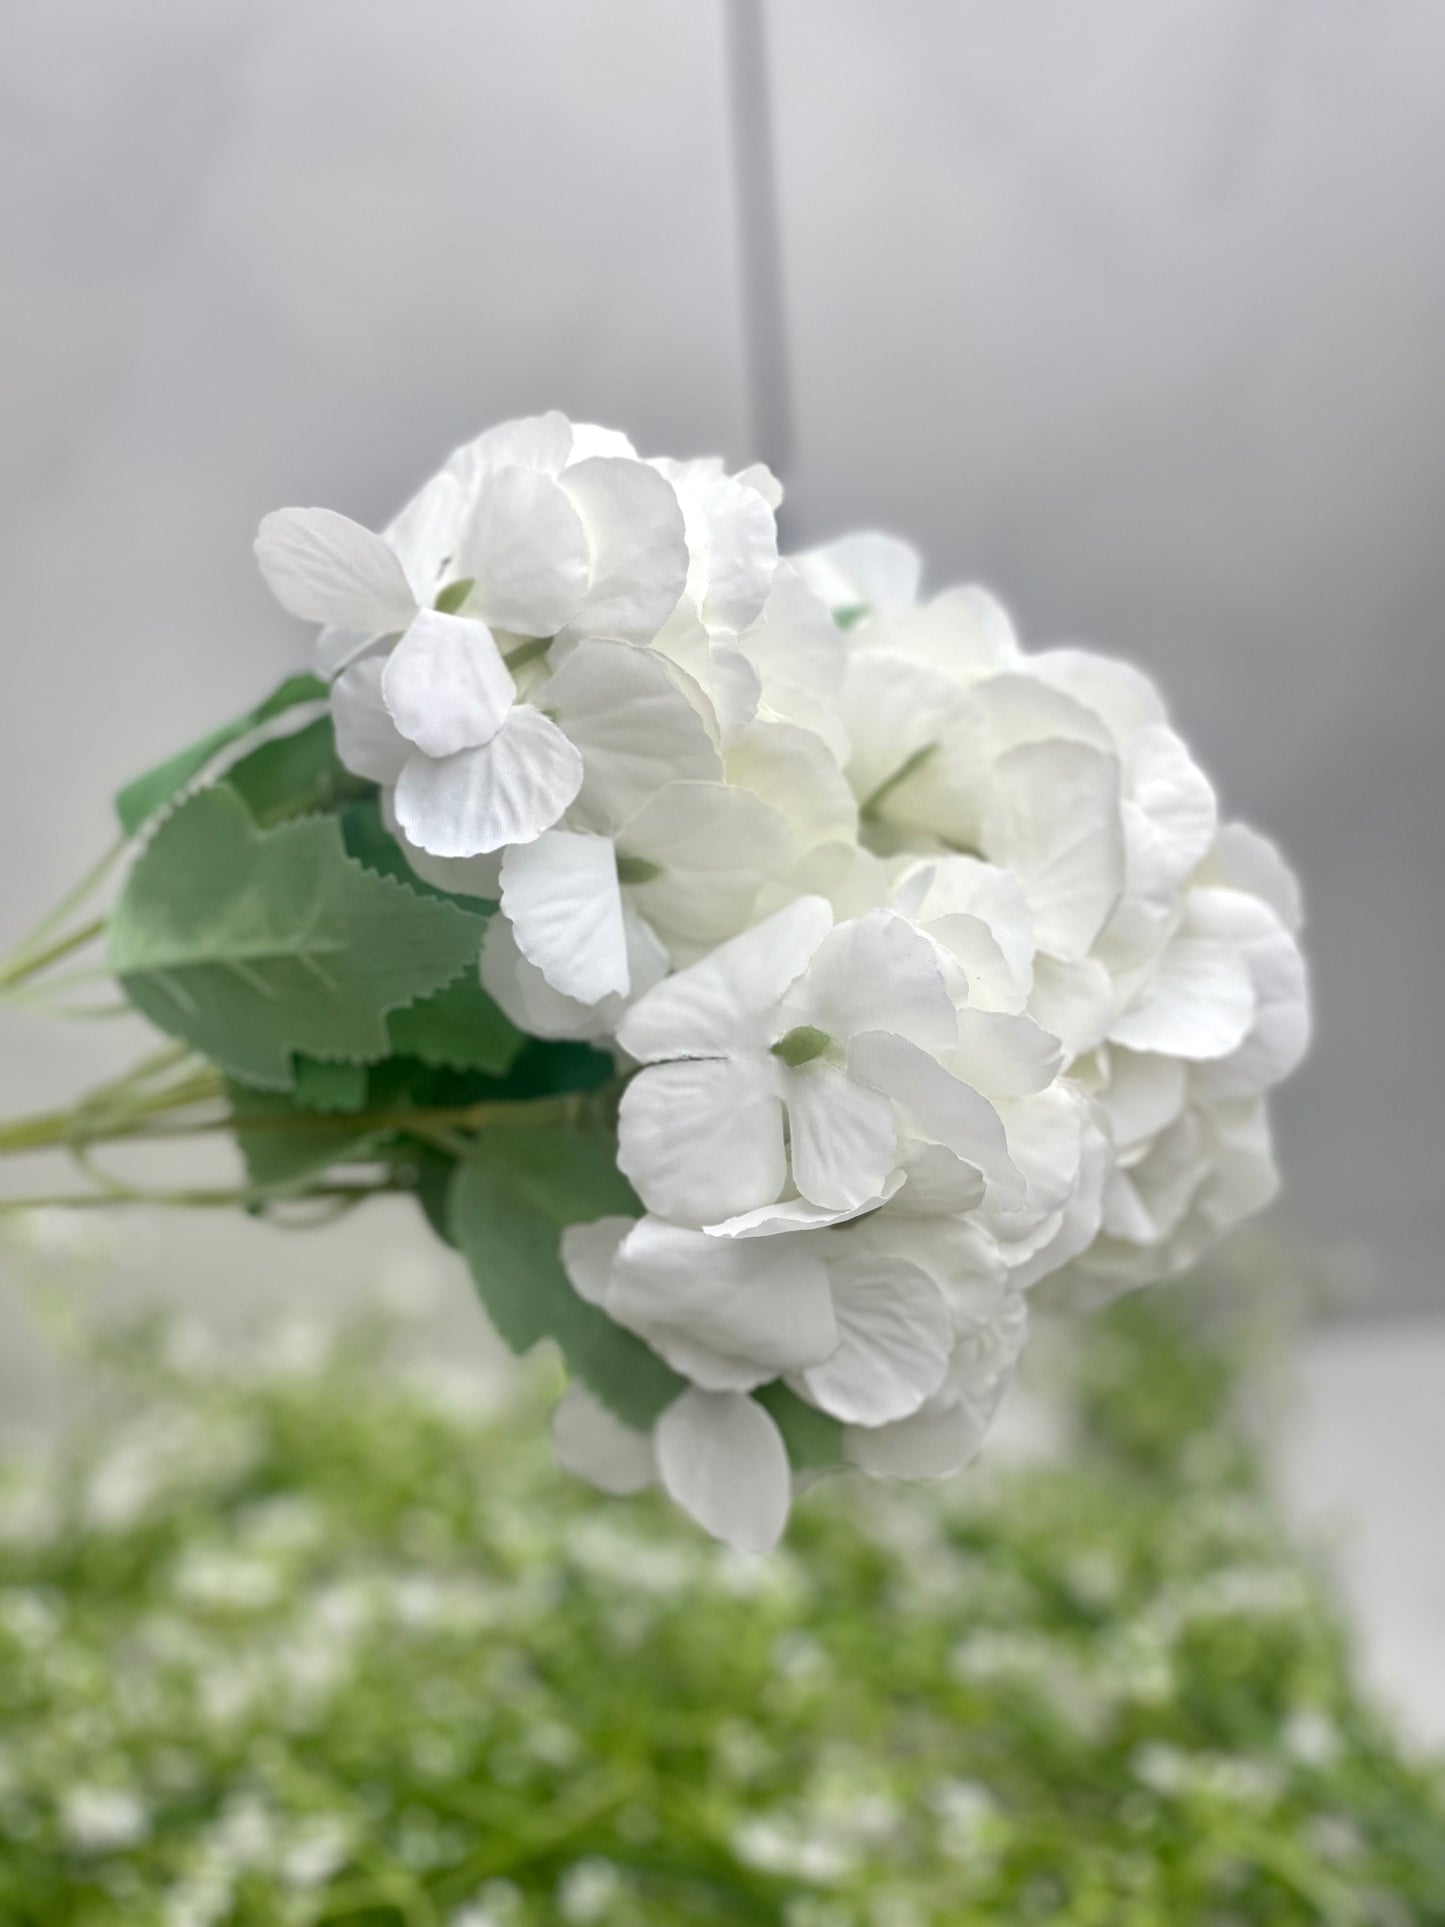 White Mini Hydrangea Bush